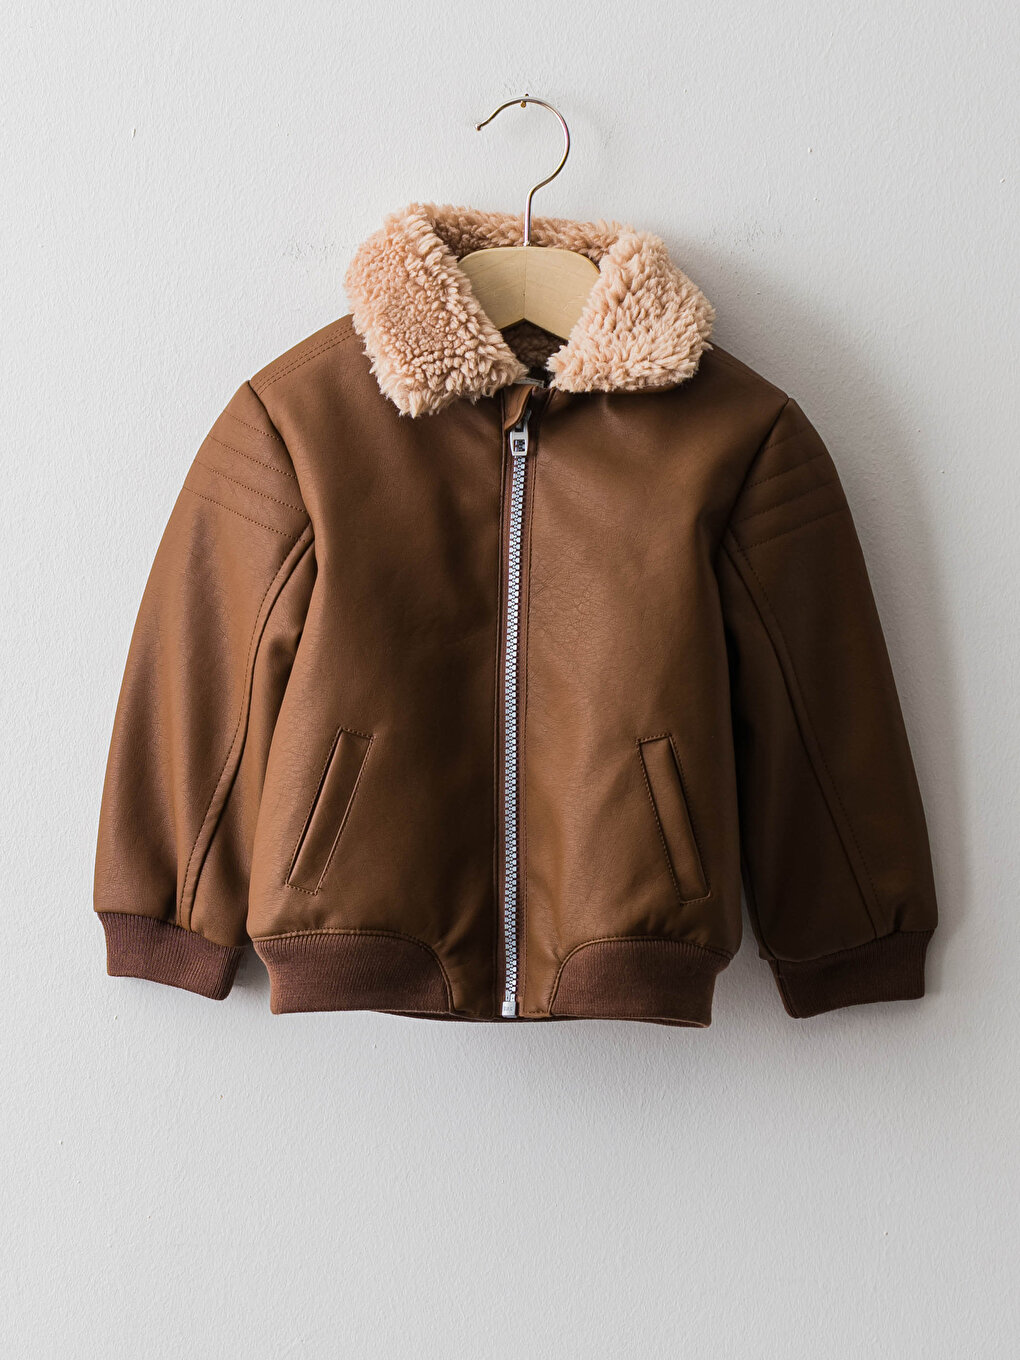 Buy Urban Republic Baby Boys Faux Leather Jacket, Cognac, 18M at Amazon.in